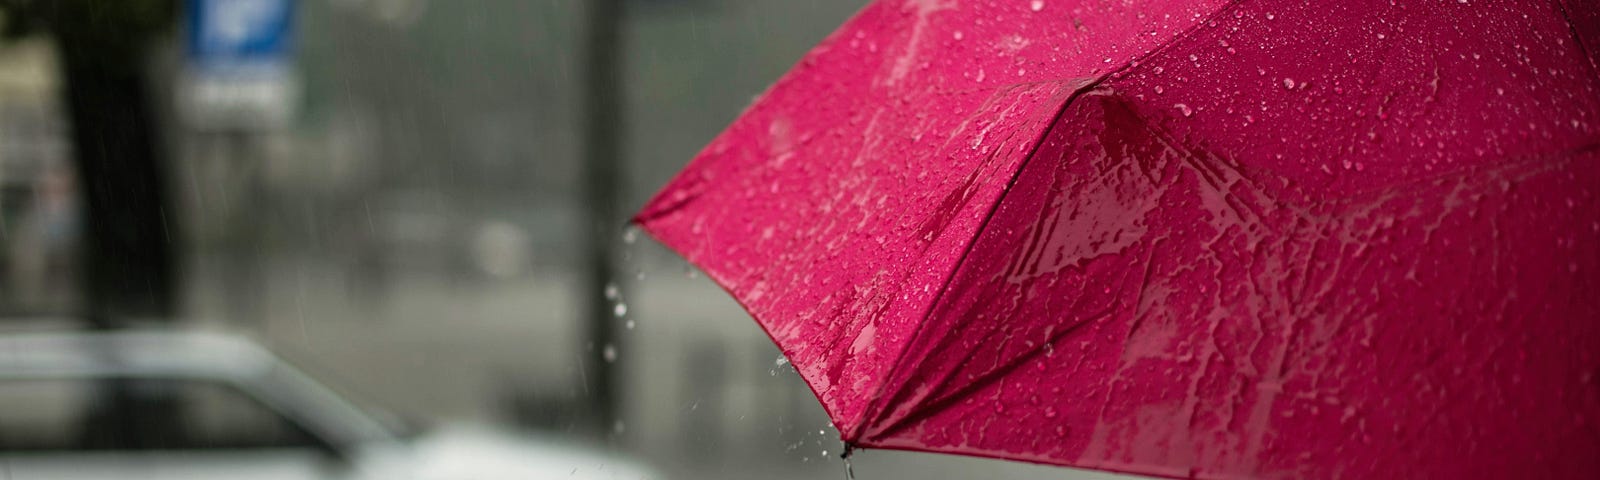 Crimson umbrella in a watery rainy street